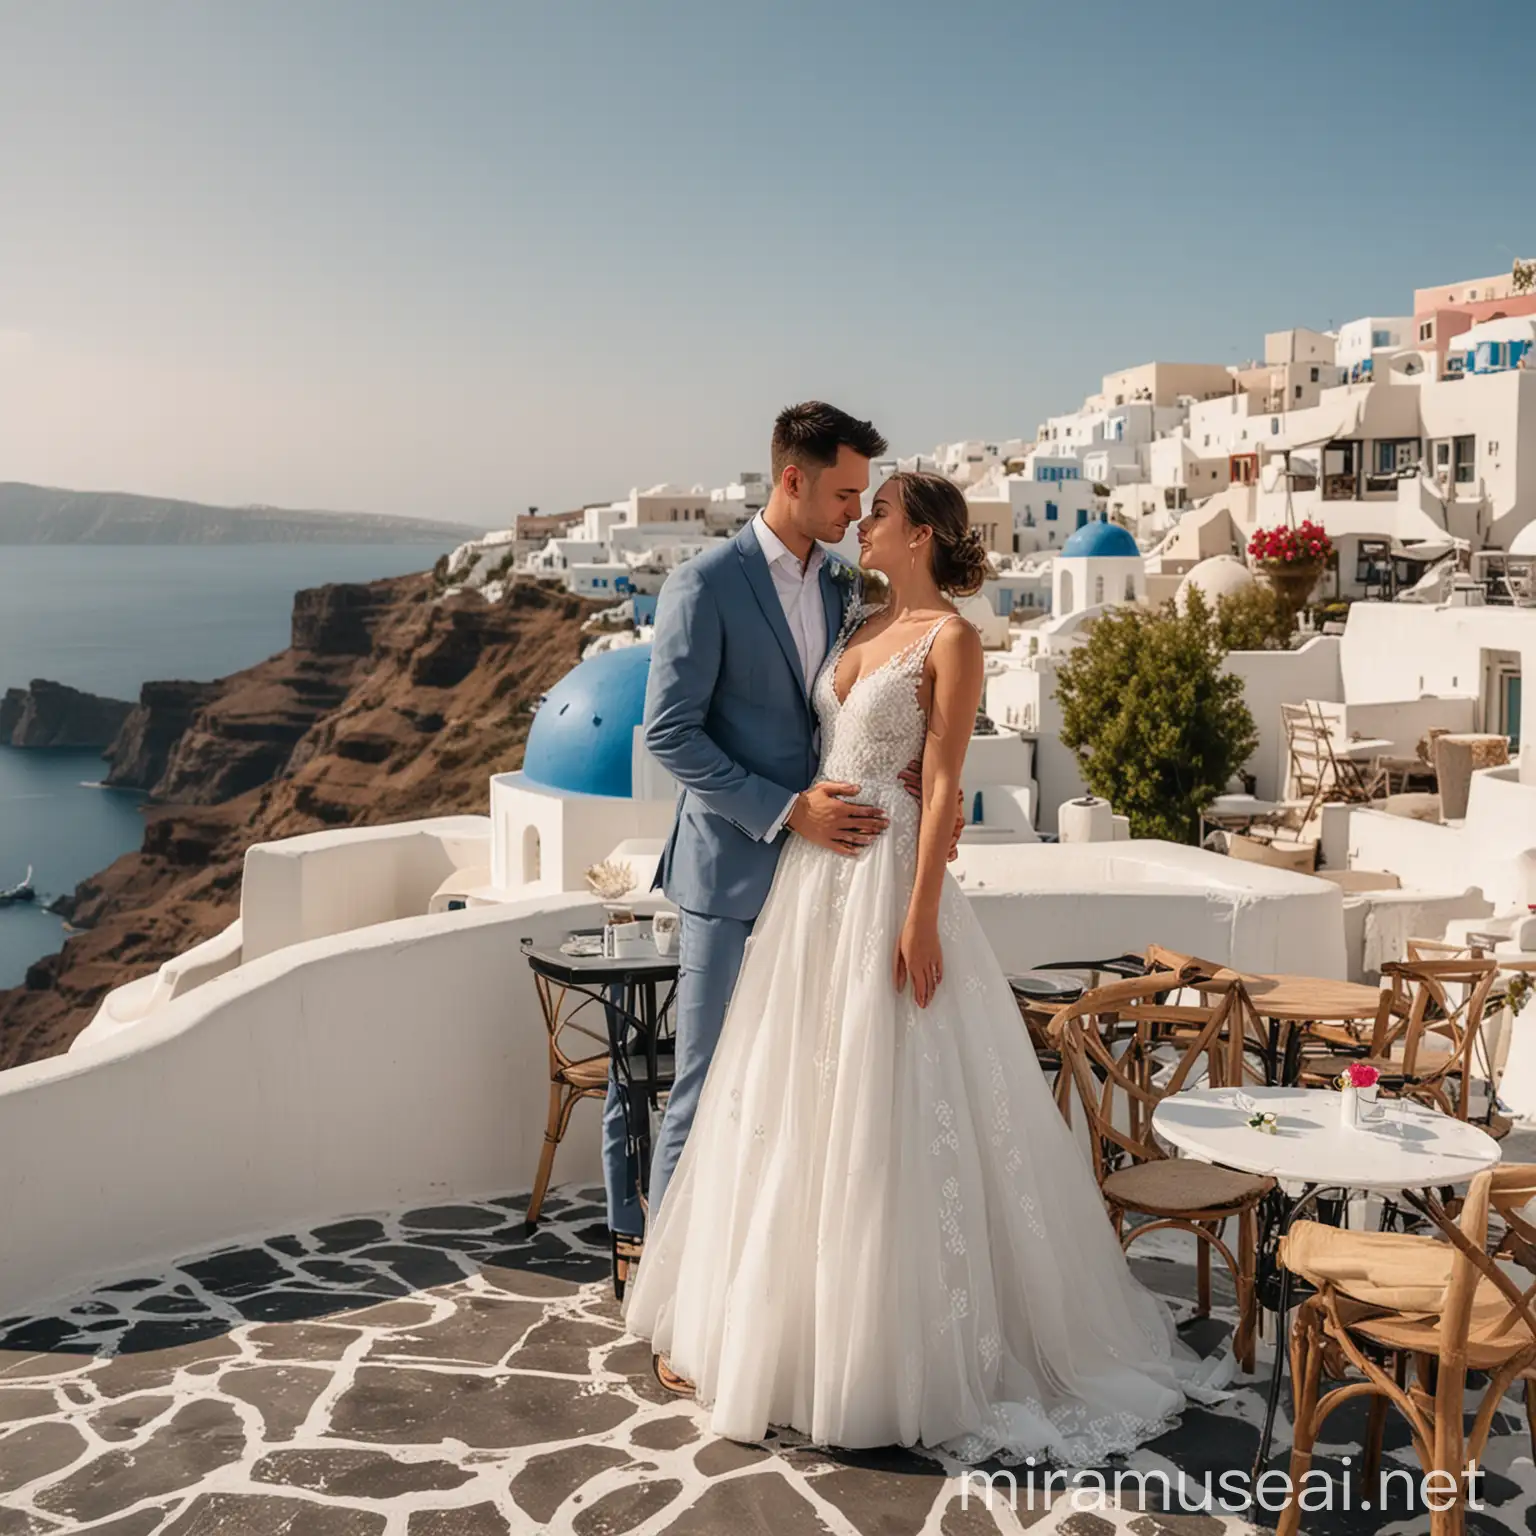 Romantic Wedding Photoshoot in a Santorini Cafe